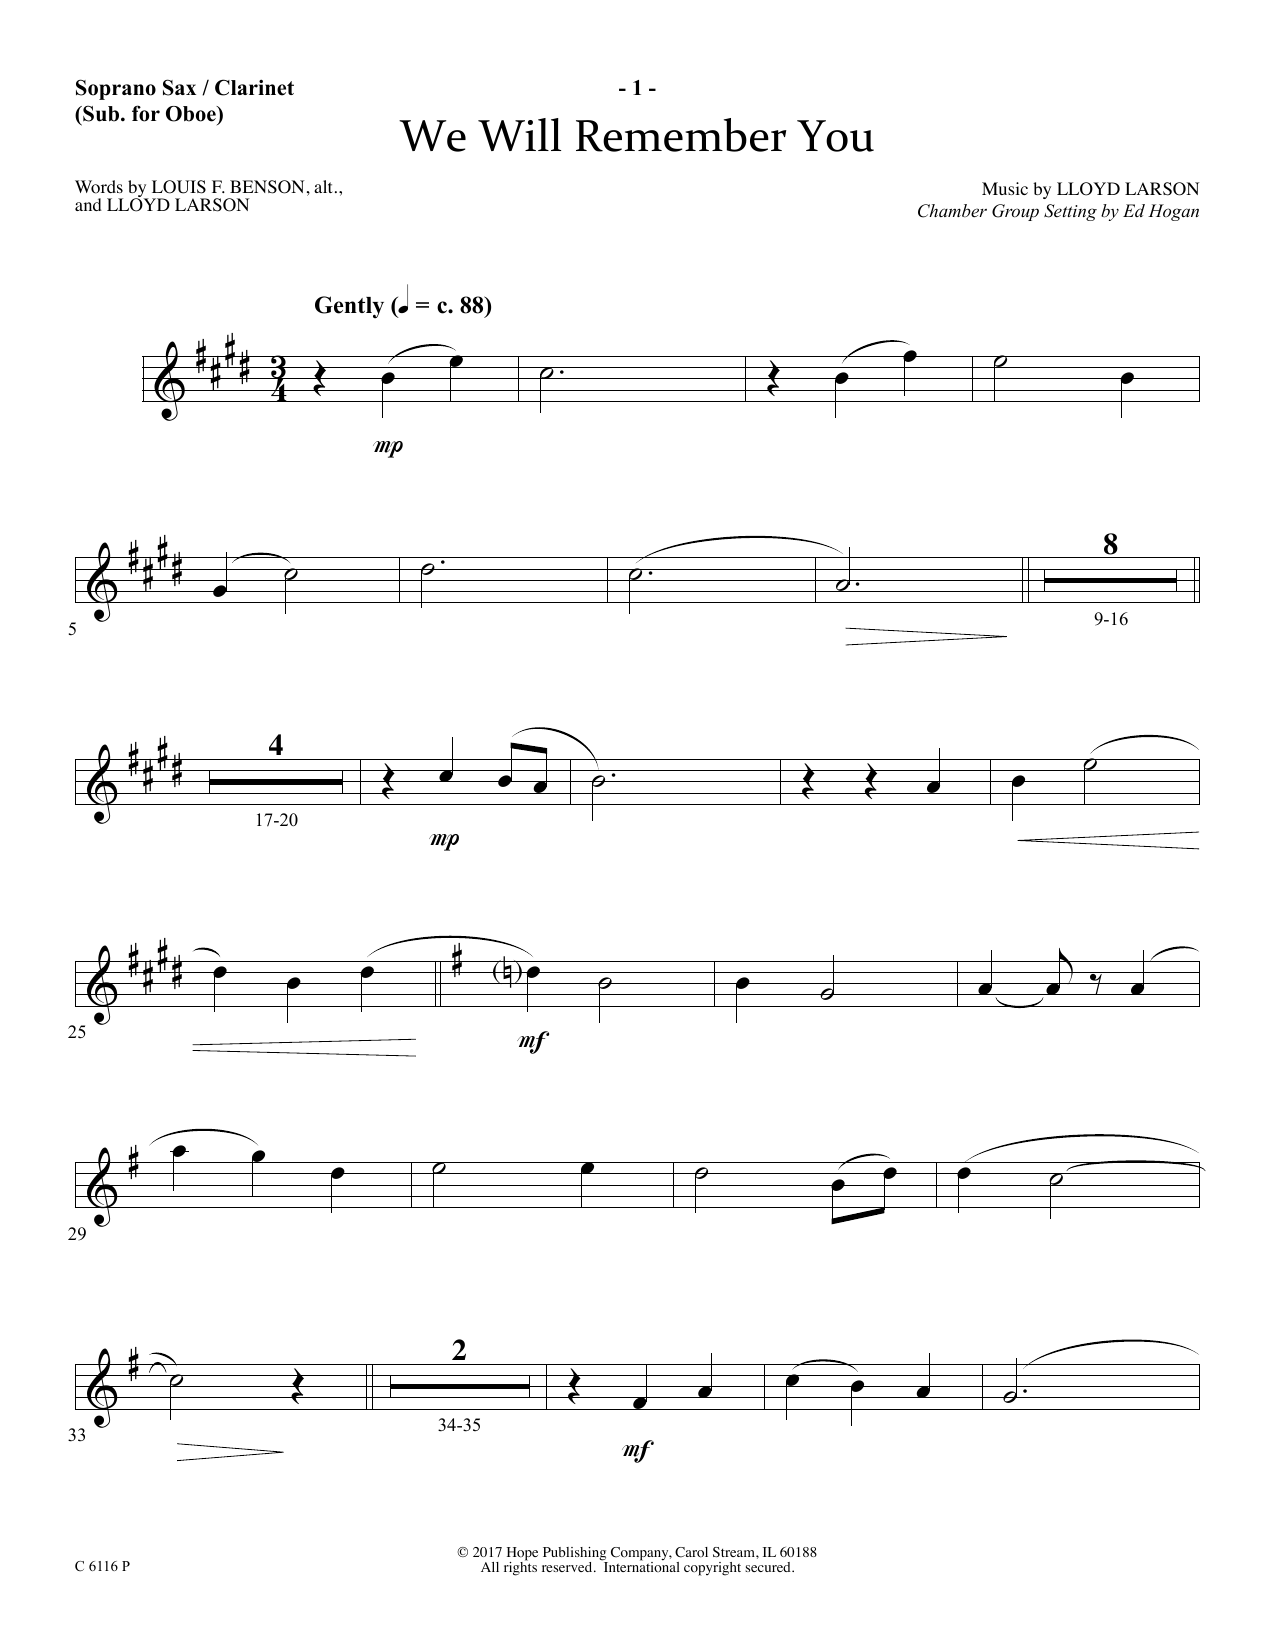 Ed Hogan We Will Remember You - Soprano Sax/Clarinet(sub oboe) Sheet Music Notes & Chords for Choir Instrumental Pak - Download or Print PDF